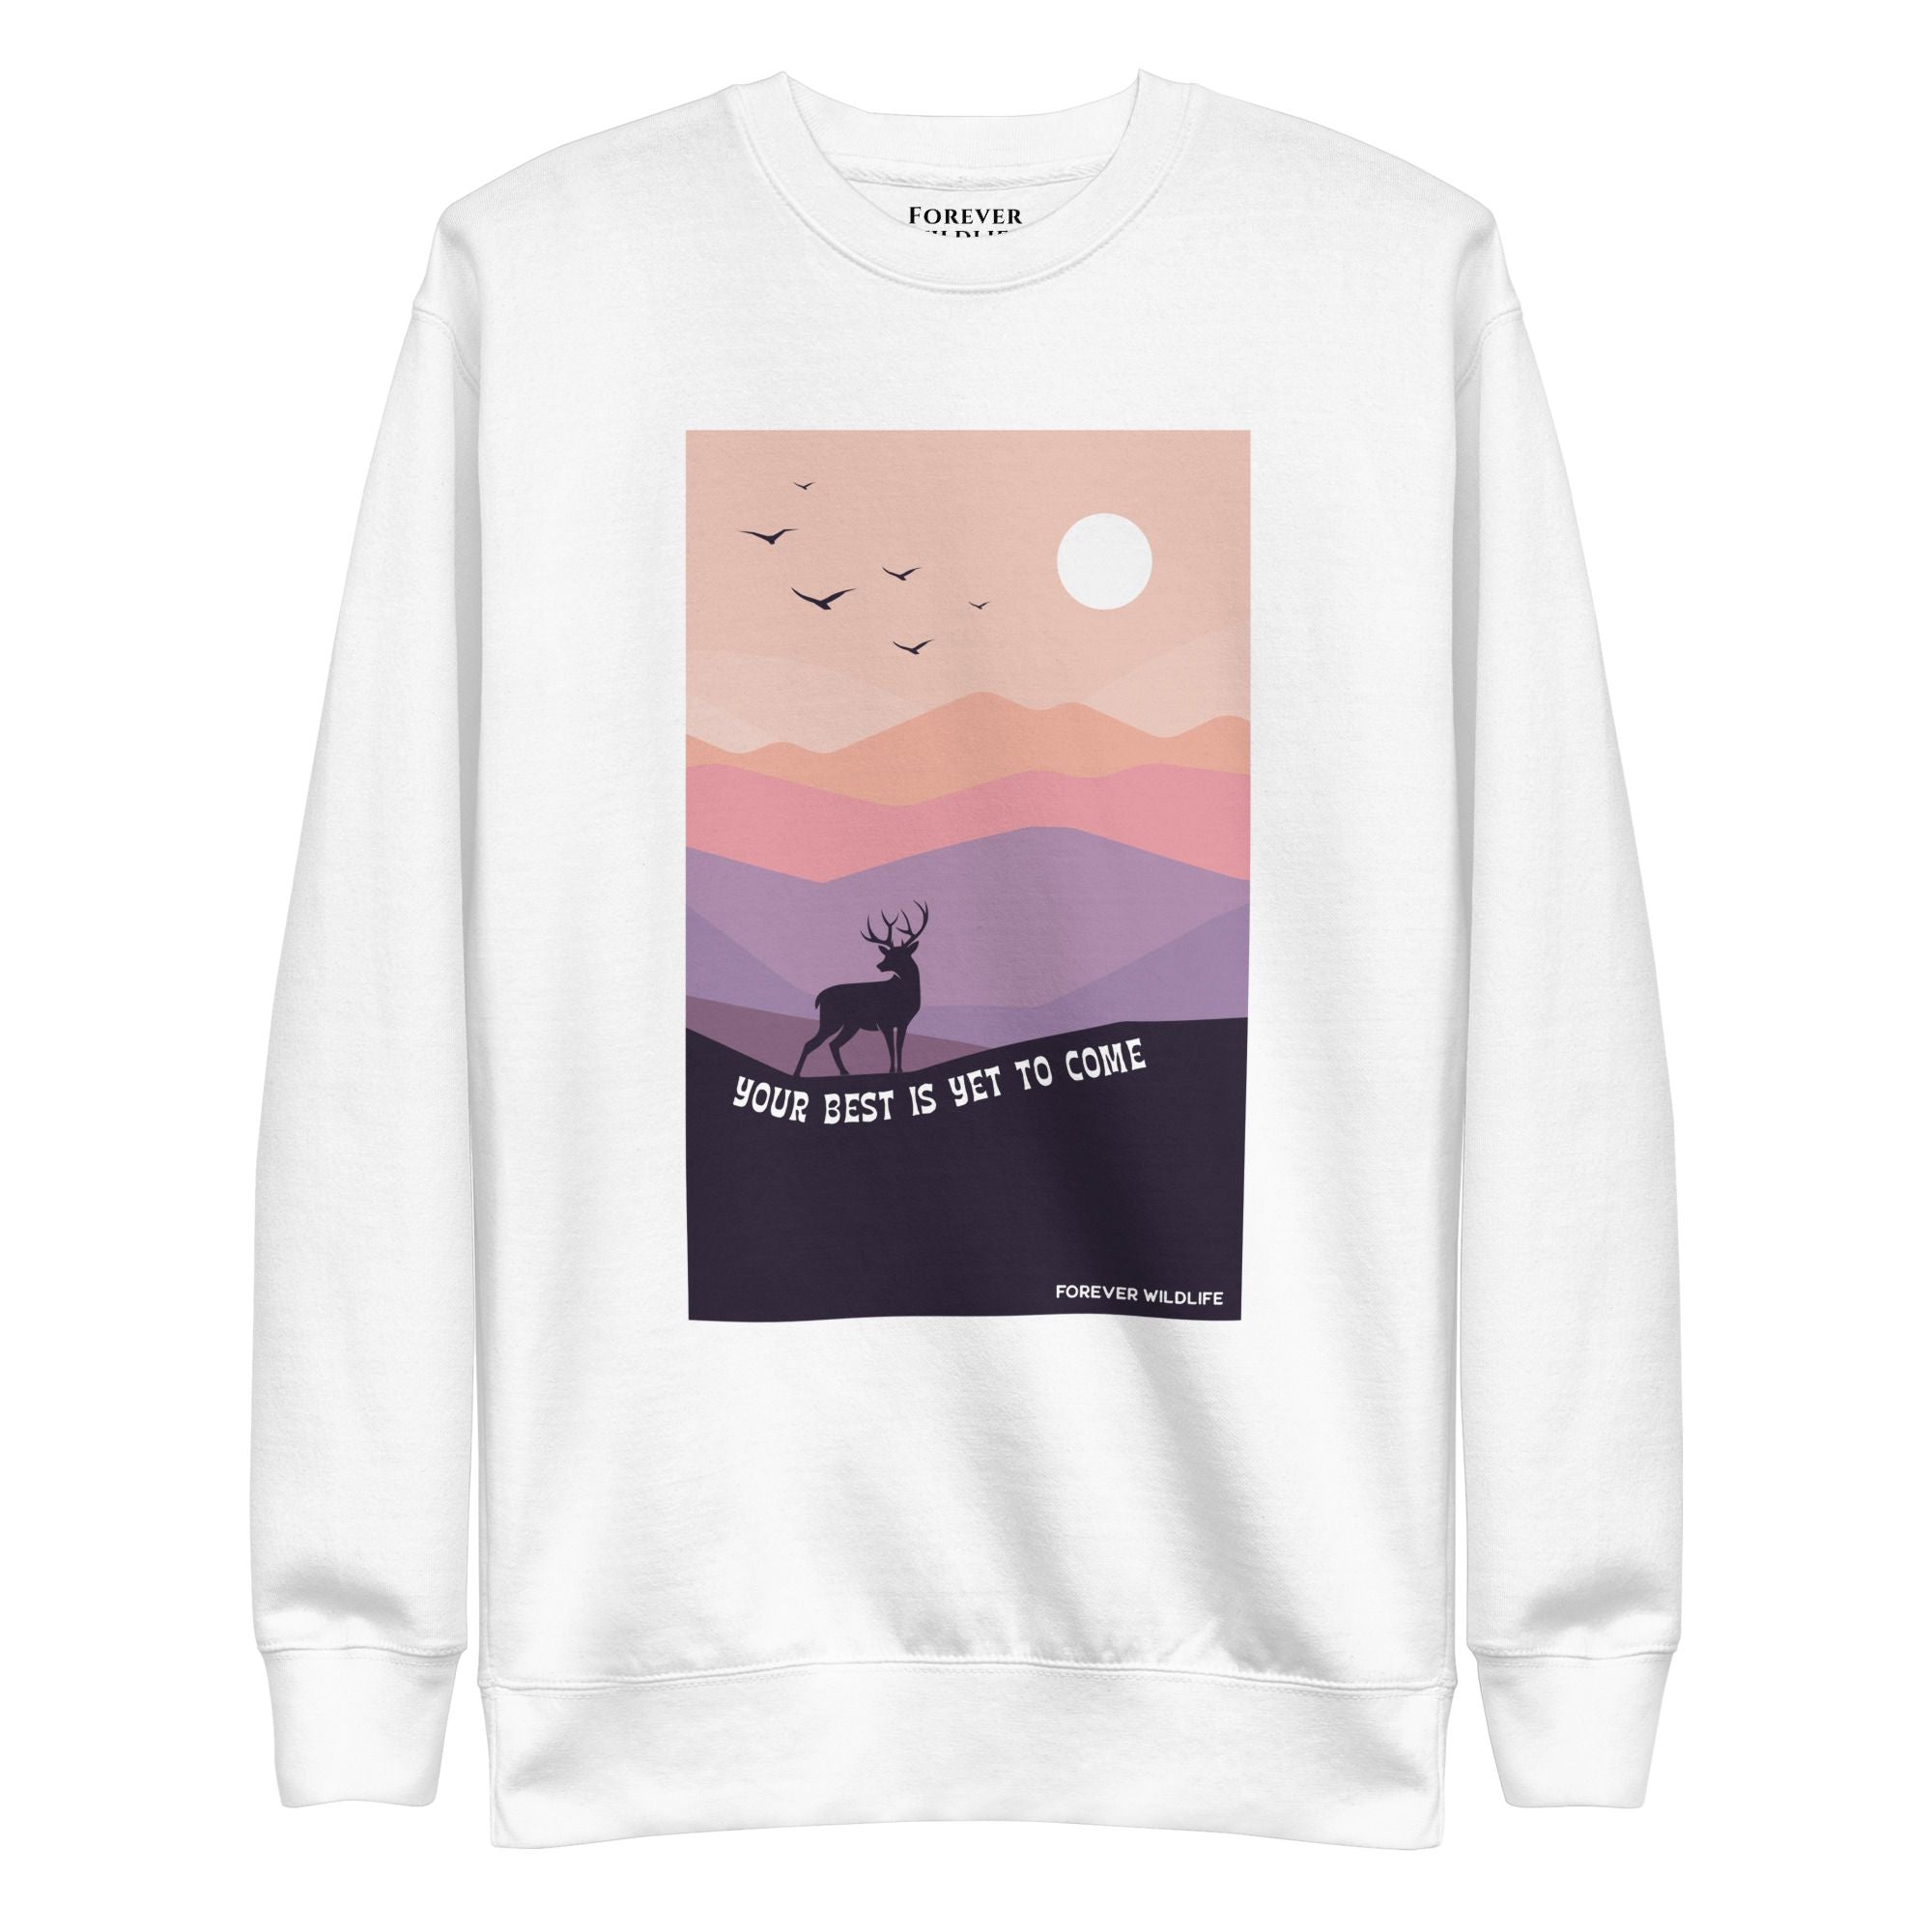  Deer Sweatshirt in White-Premium Wildlife Animal Inspiration Sweatshirt Design with 'Your Best Is Yet To Come' text, part of Wildlife Sweatshirts & Clothing from Forever Wildlife.